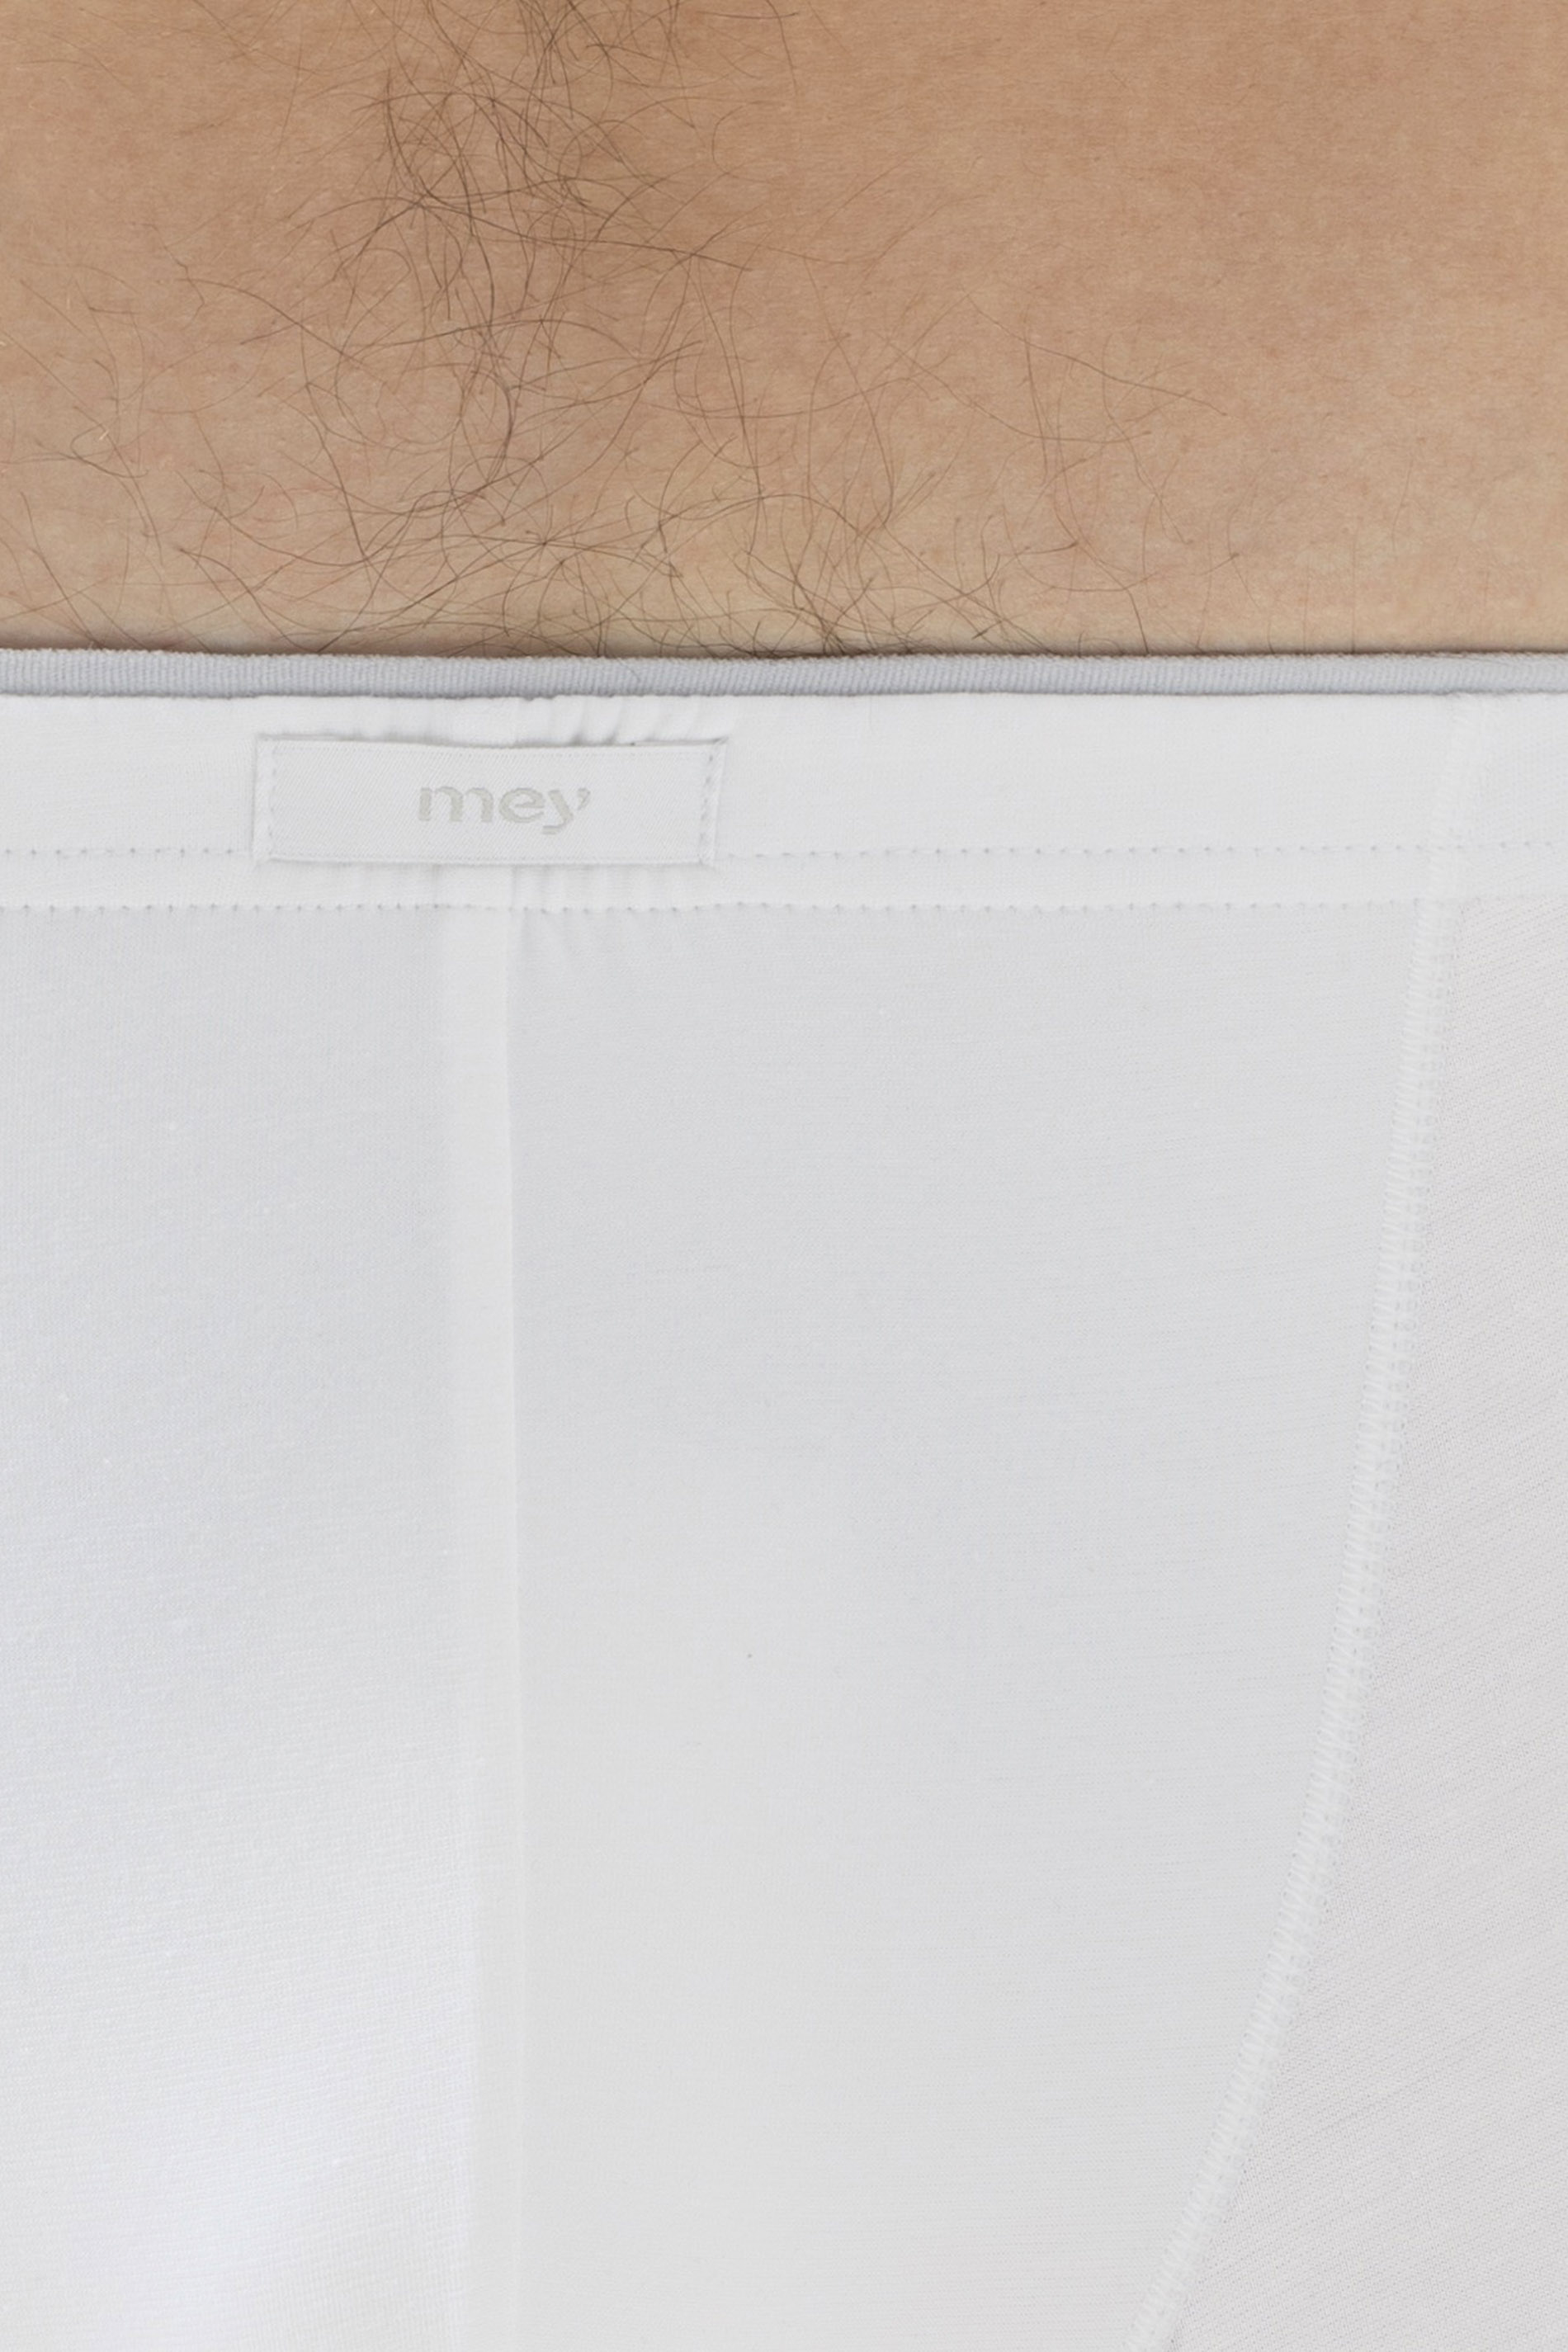 Shorty Weiss Serie Dry Cotton Detailansicht 01 | mey®